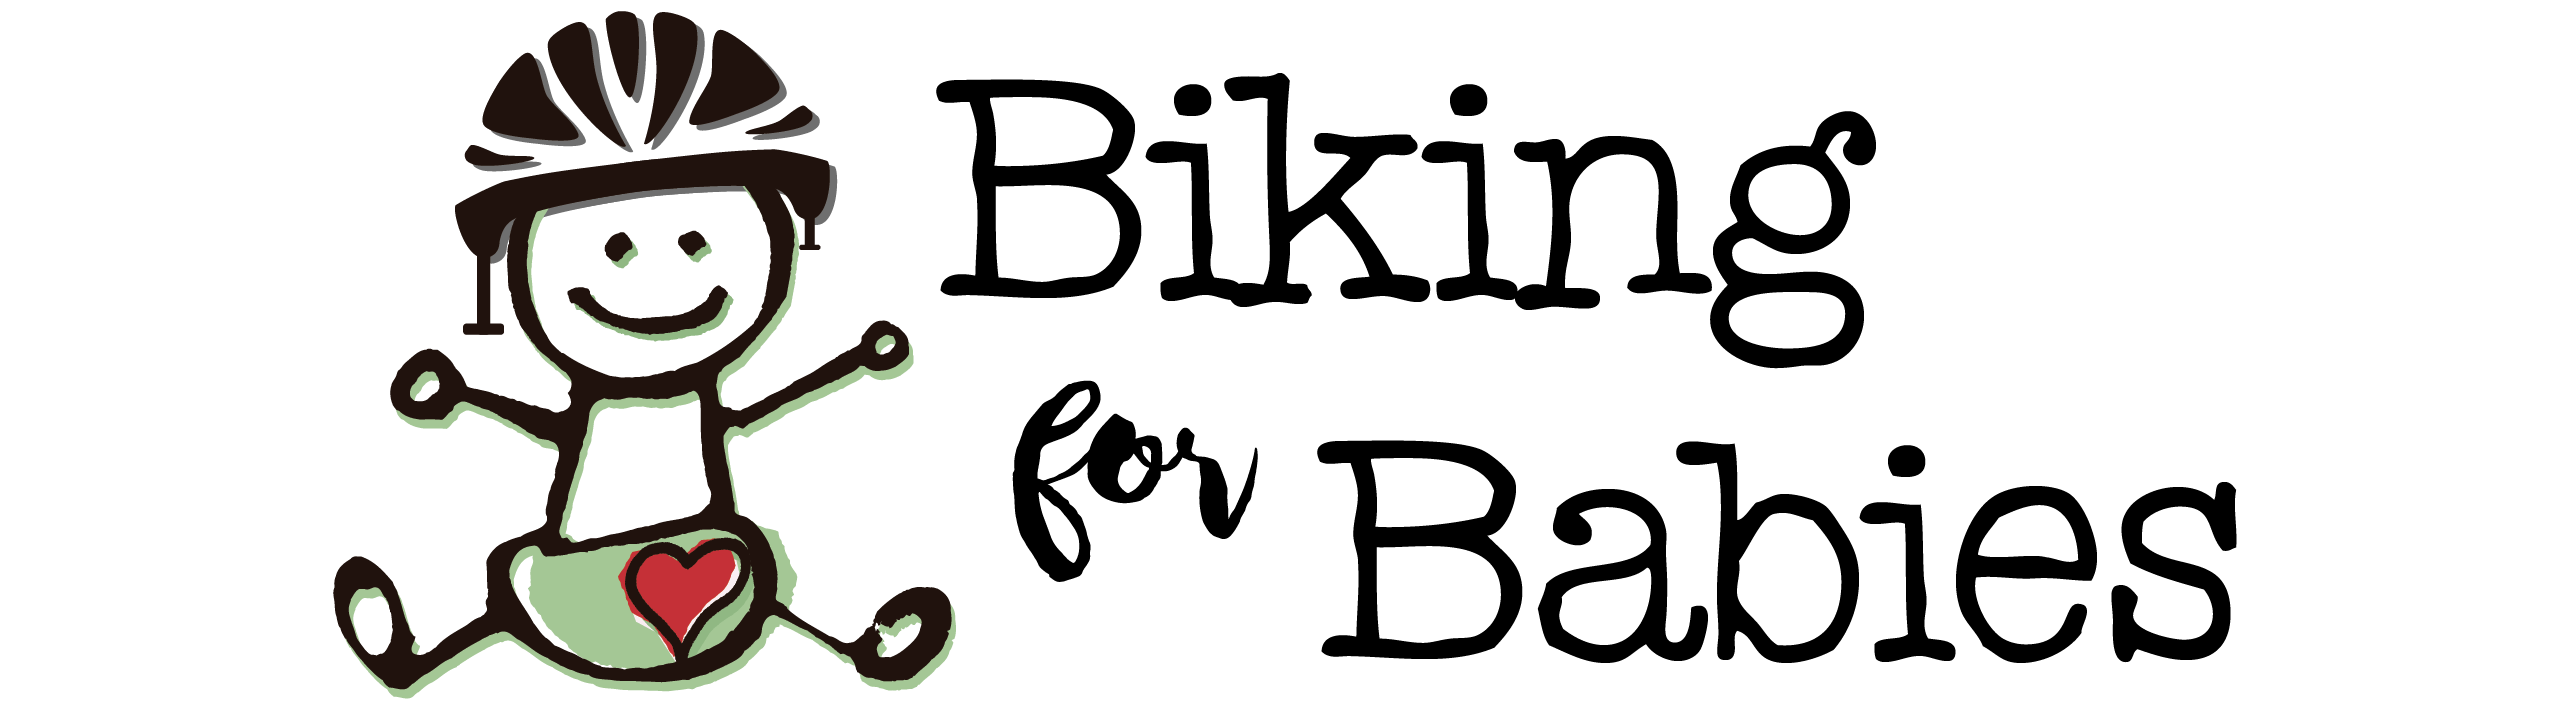 Biking For Babies-01